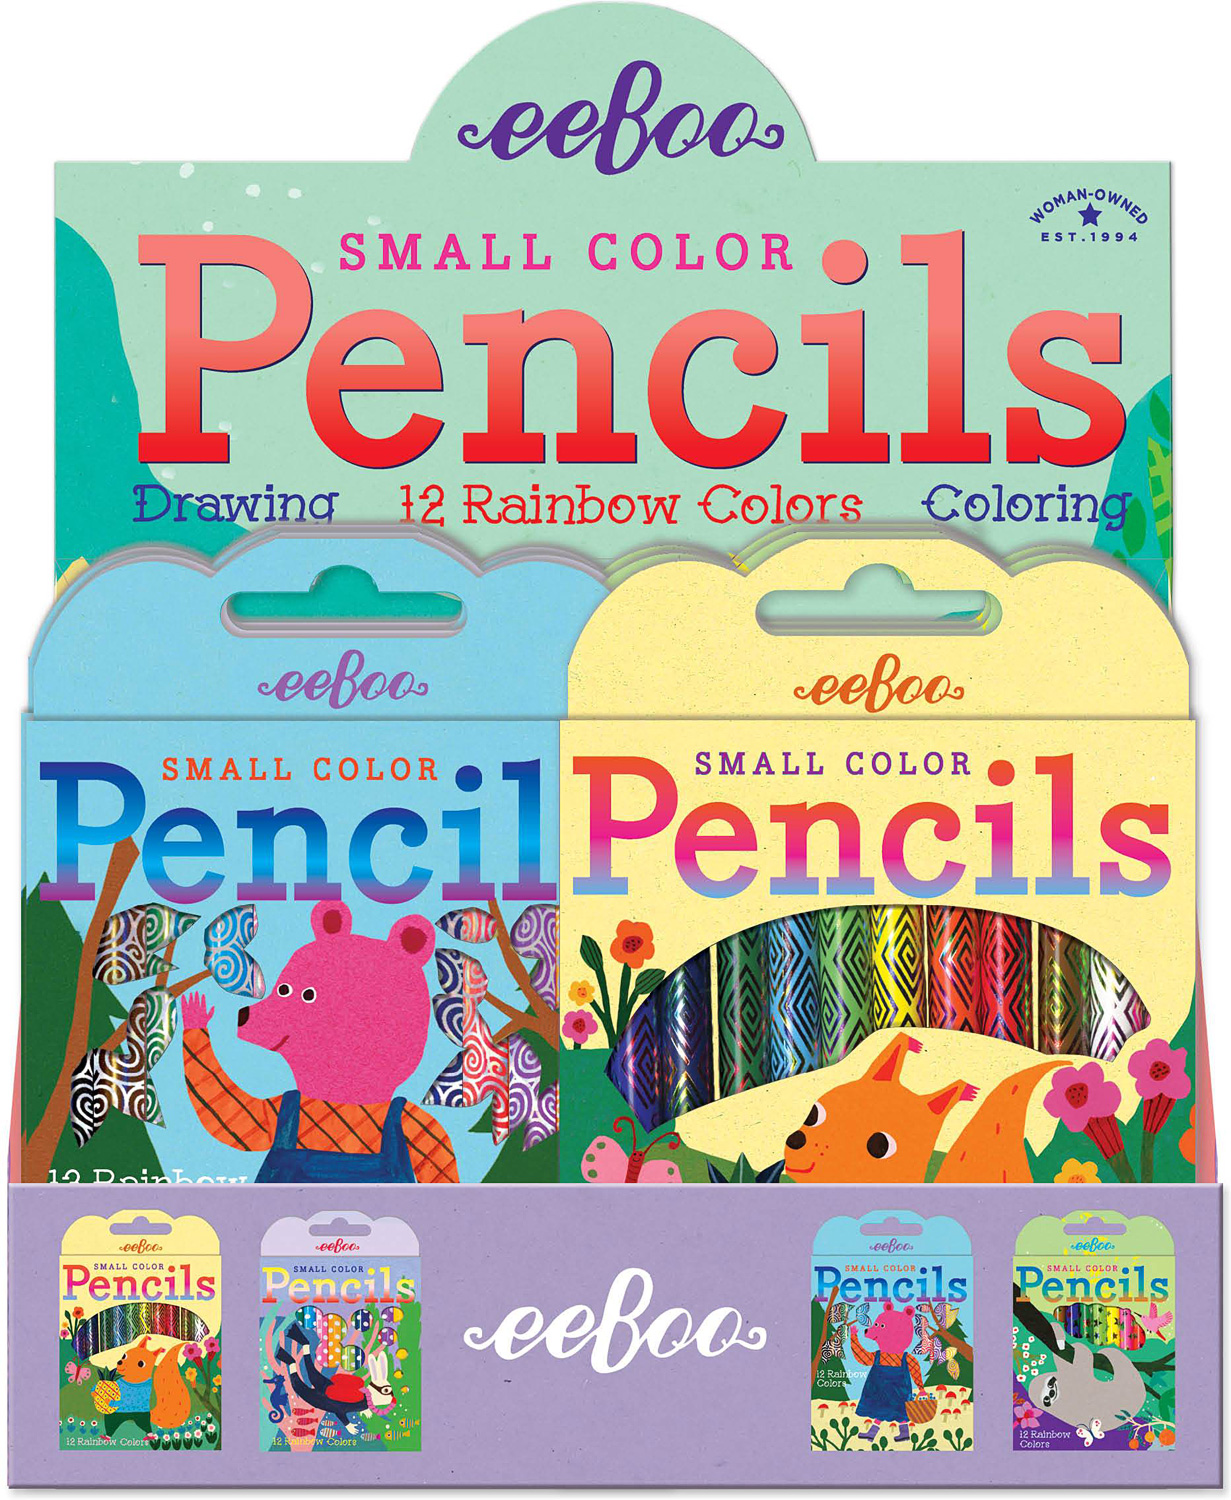 Colouring Pencils, Kids' Activity Packs